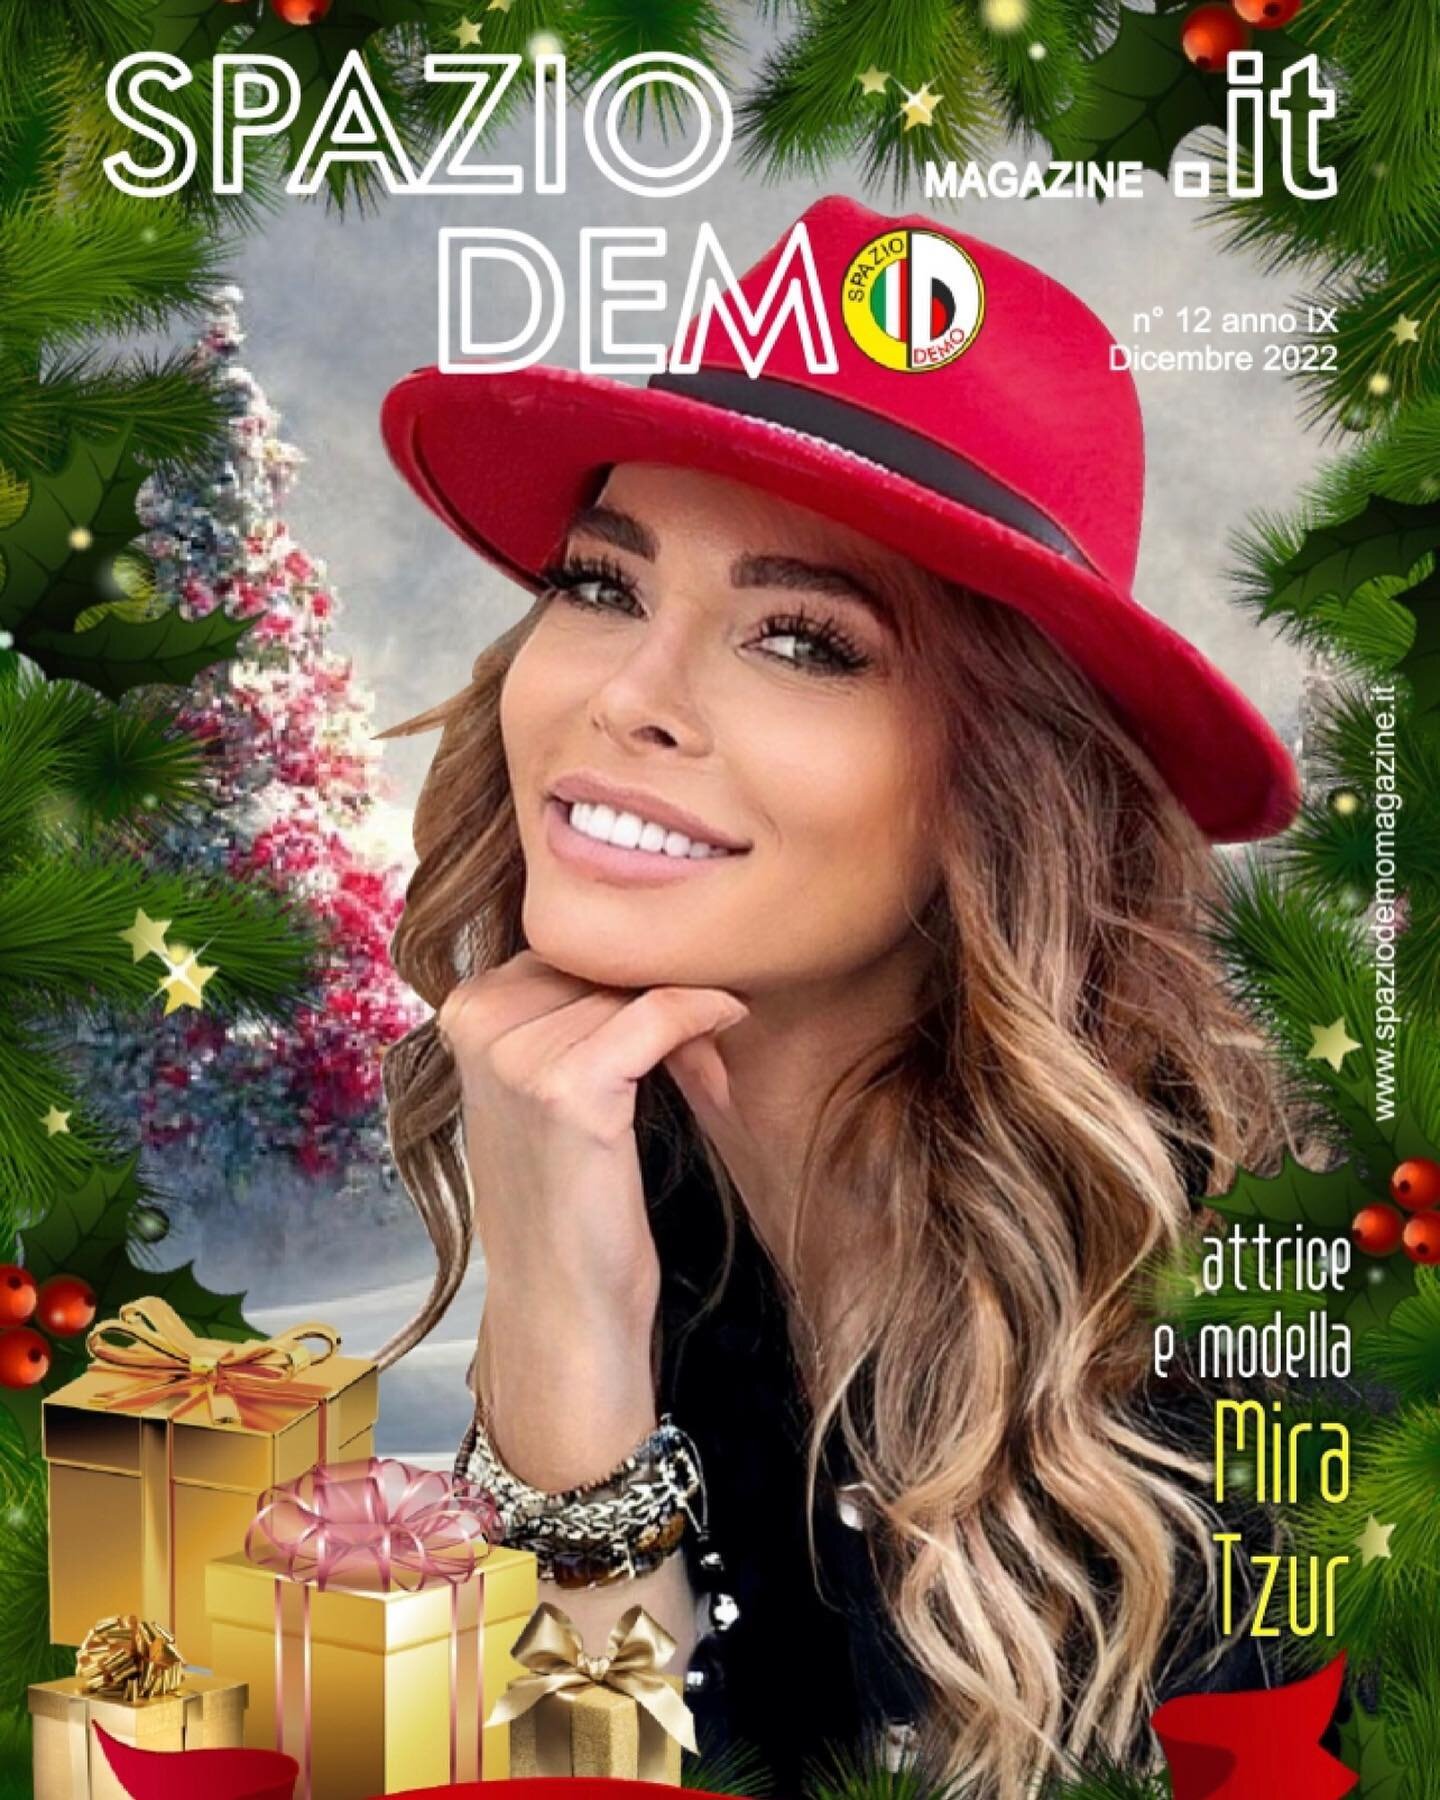 Viva Italy 🇮🇹 Thank you @spaziodemomagazine  for this beautiful featured story #covergirl #italian #royalty #holidayissue #christmasissue #magazine